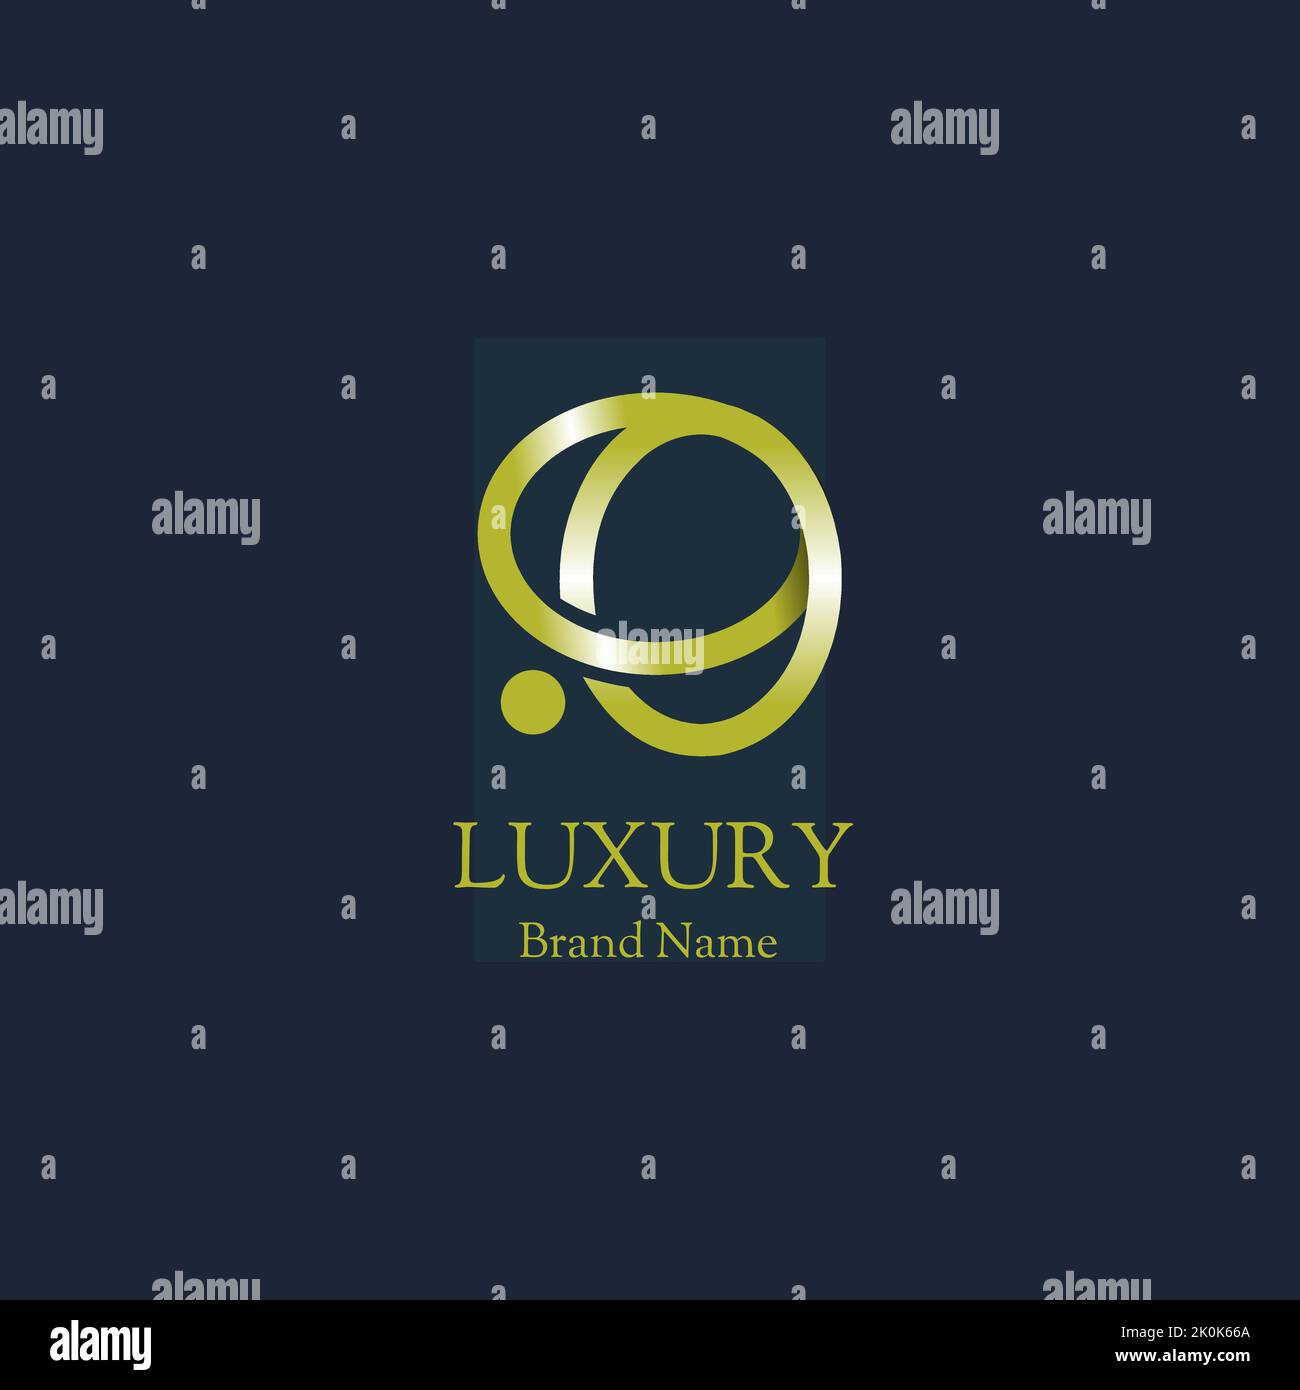 Vinnytsia, Ukraine - May 30, 2021: Popular luxury brands. Gucci